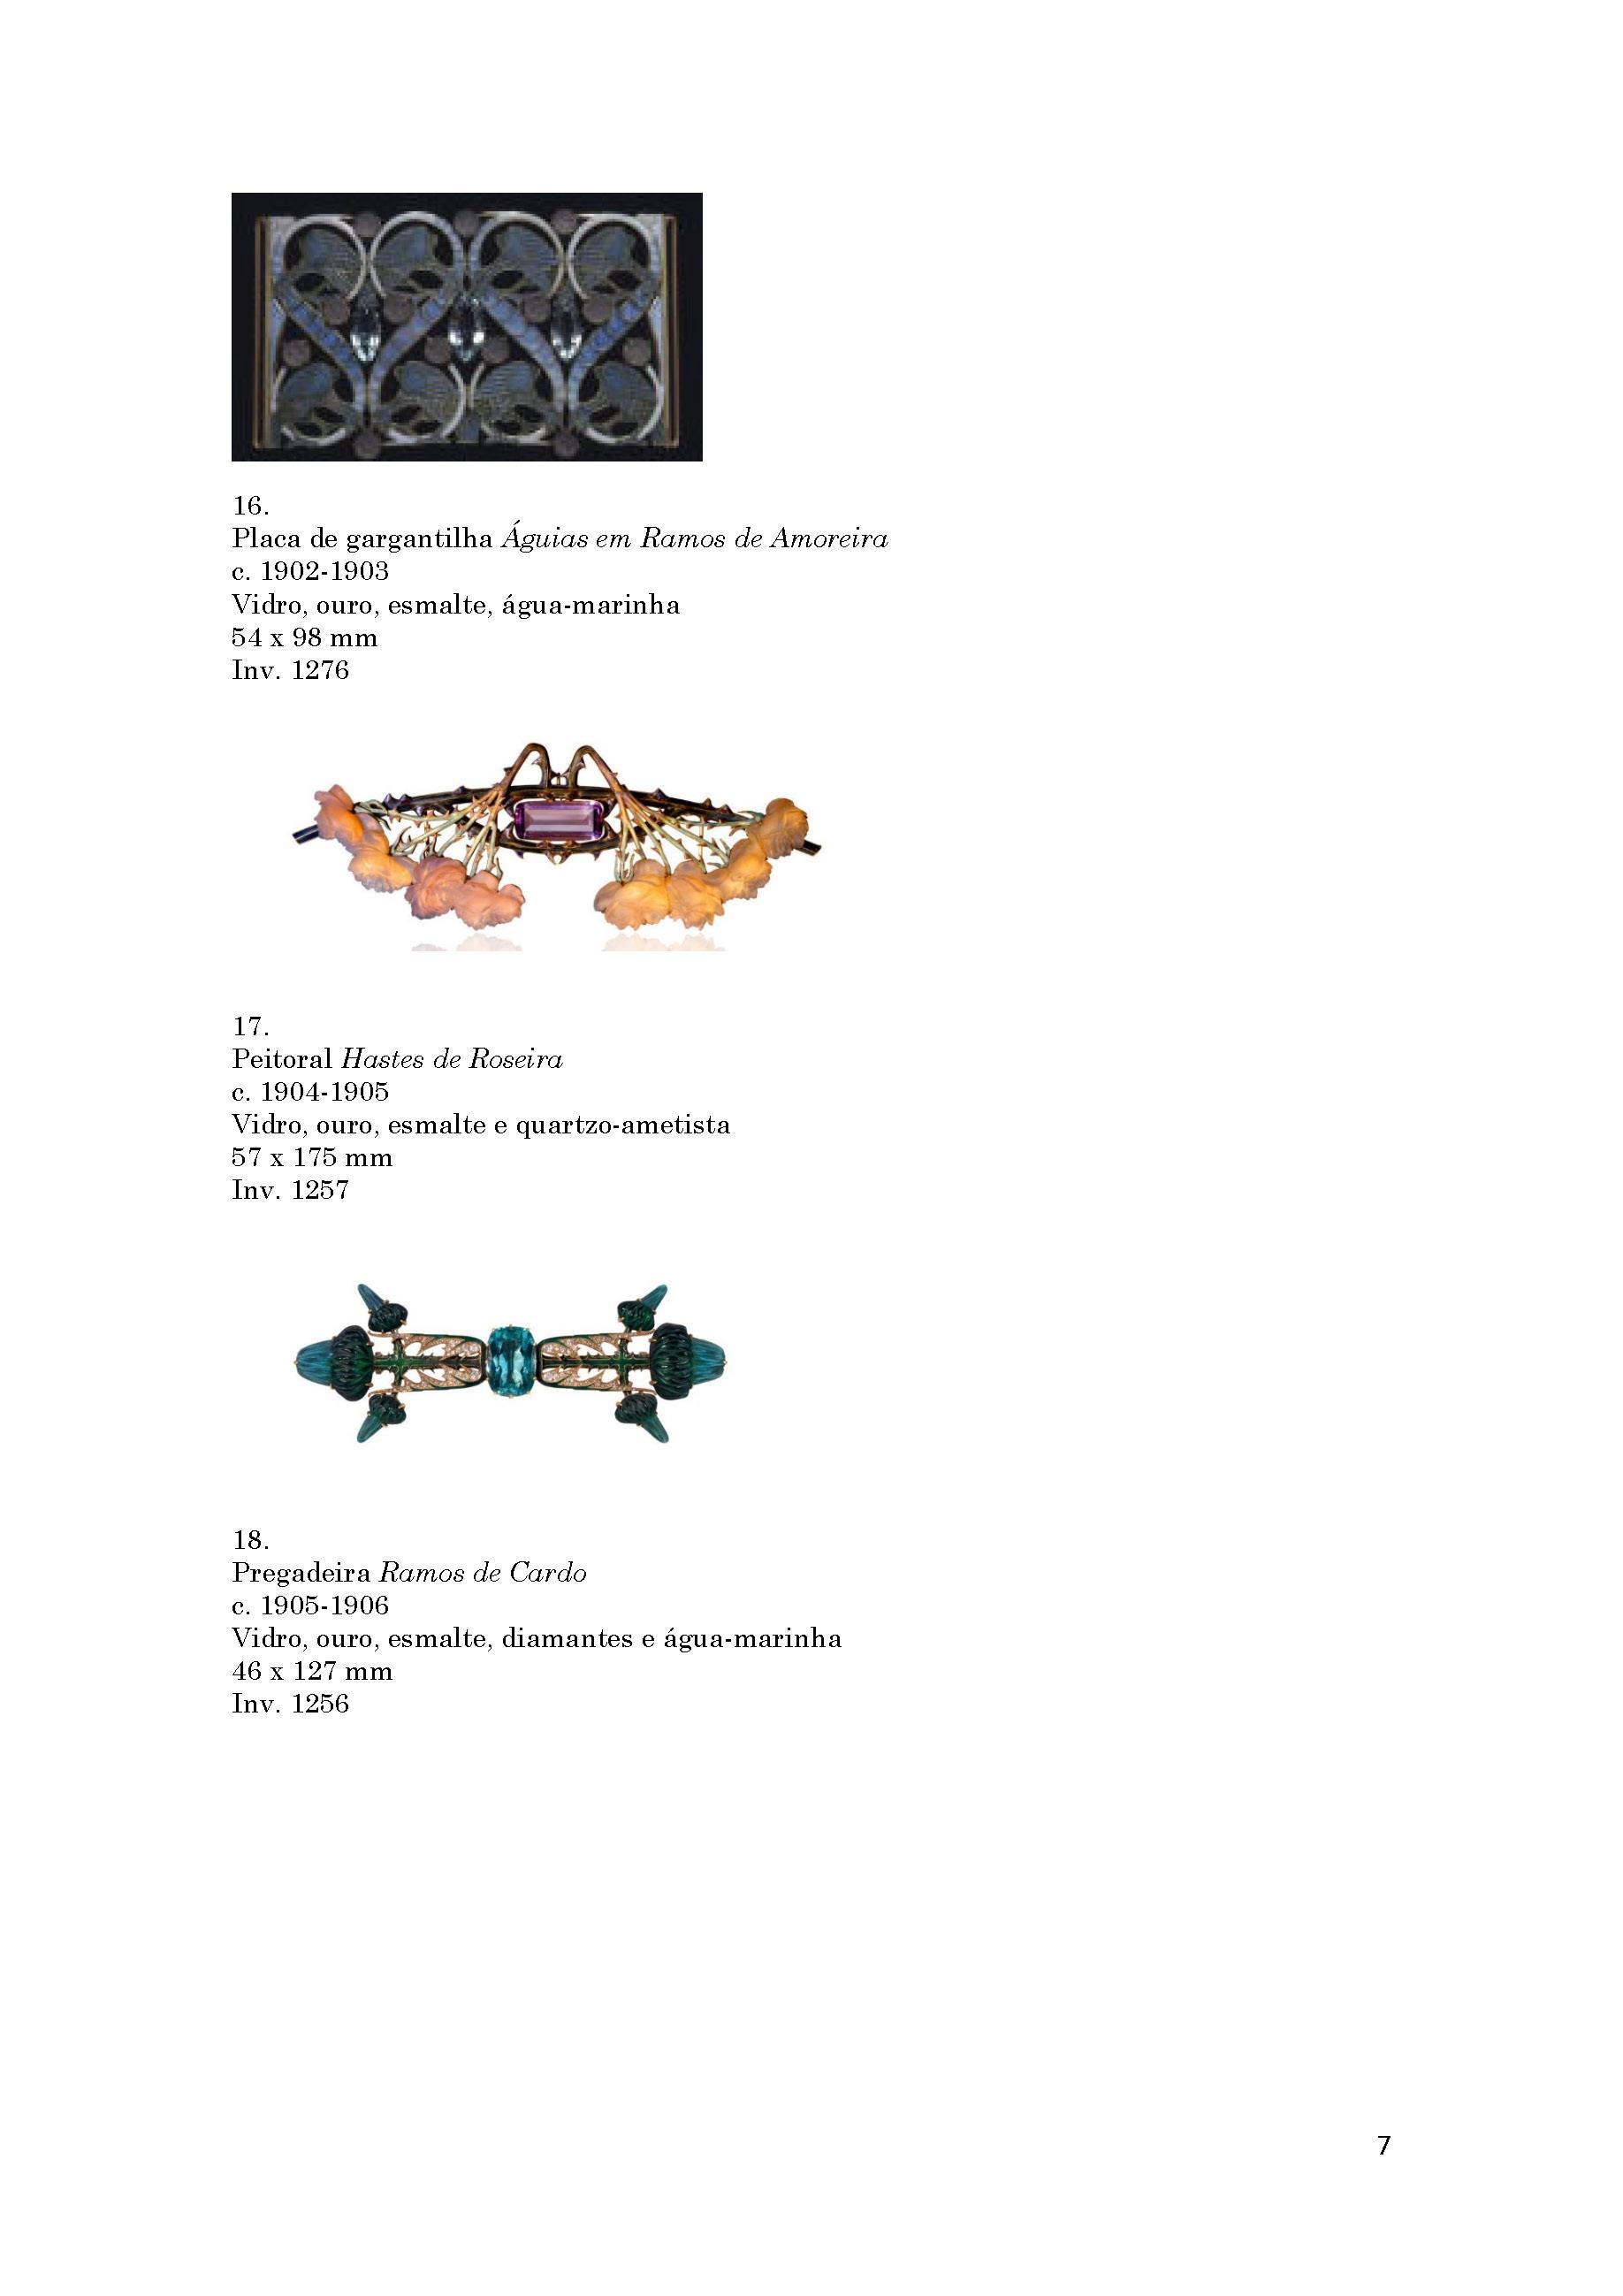 Lista_Vidros_Lalique_25.09.2020_1.7